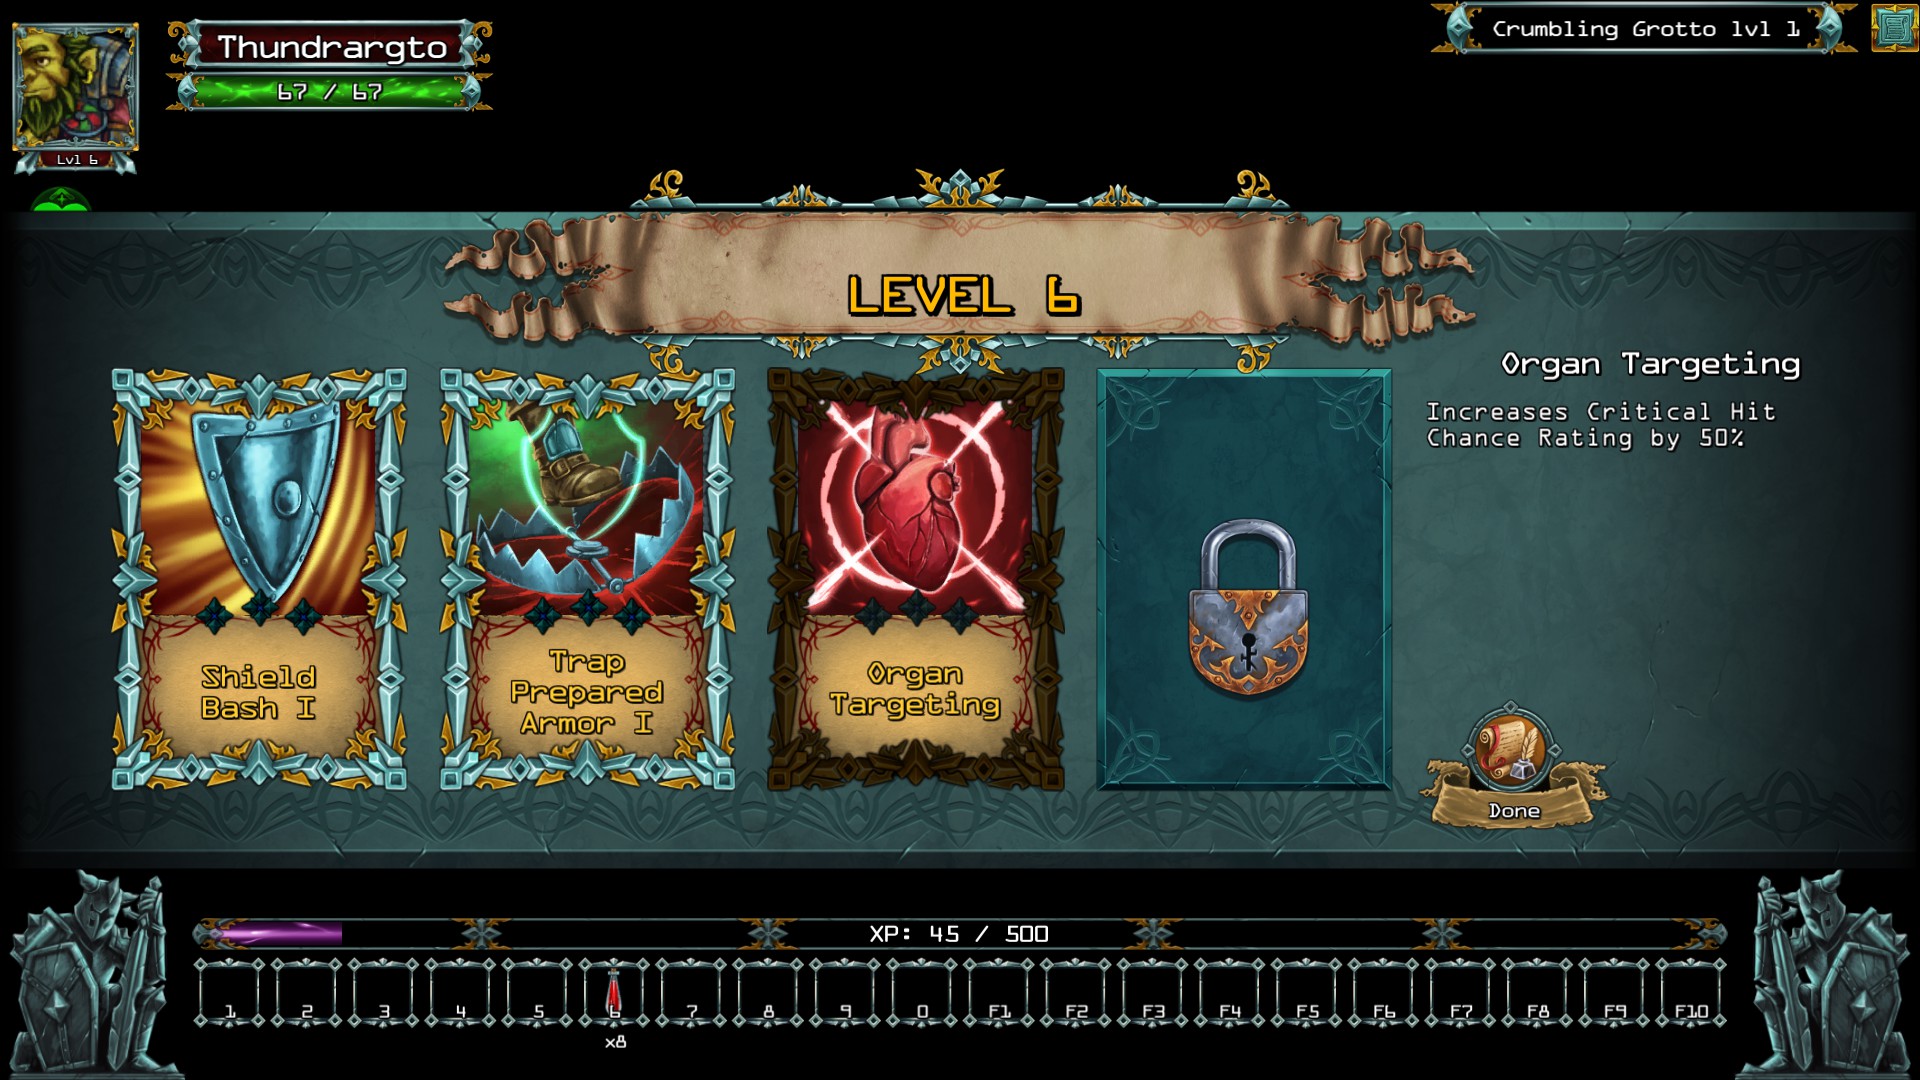 Rogue Empire: Dungeon Crawler RPG screenshot